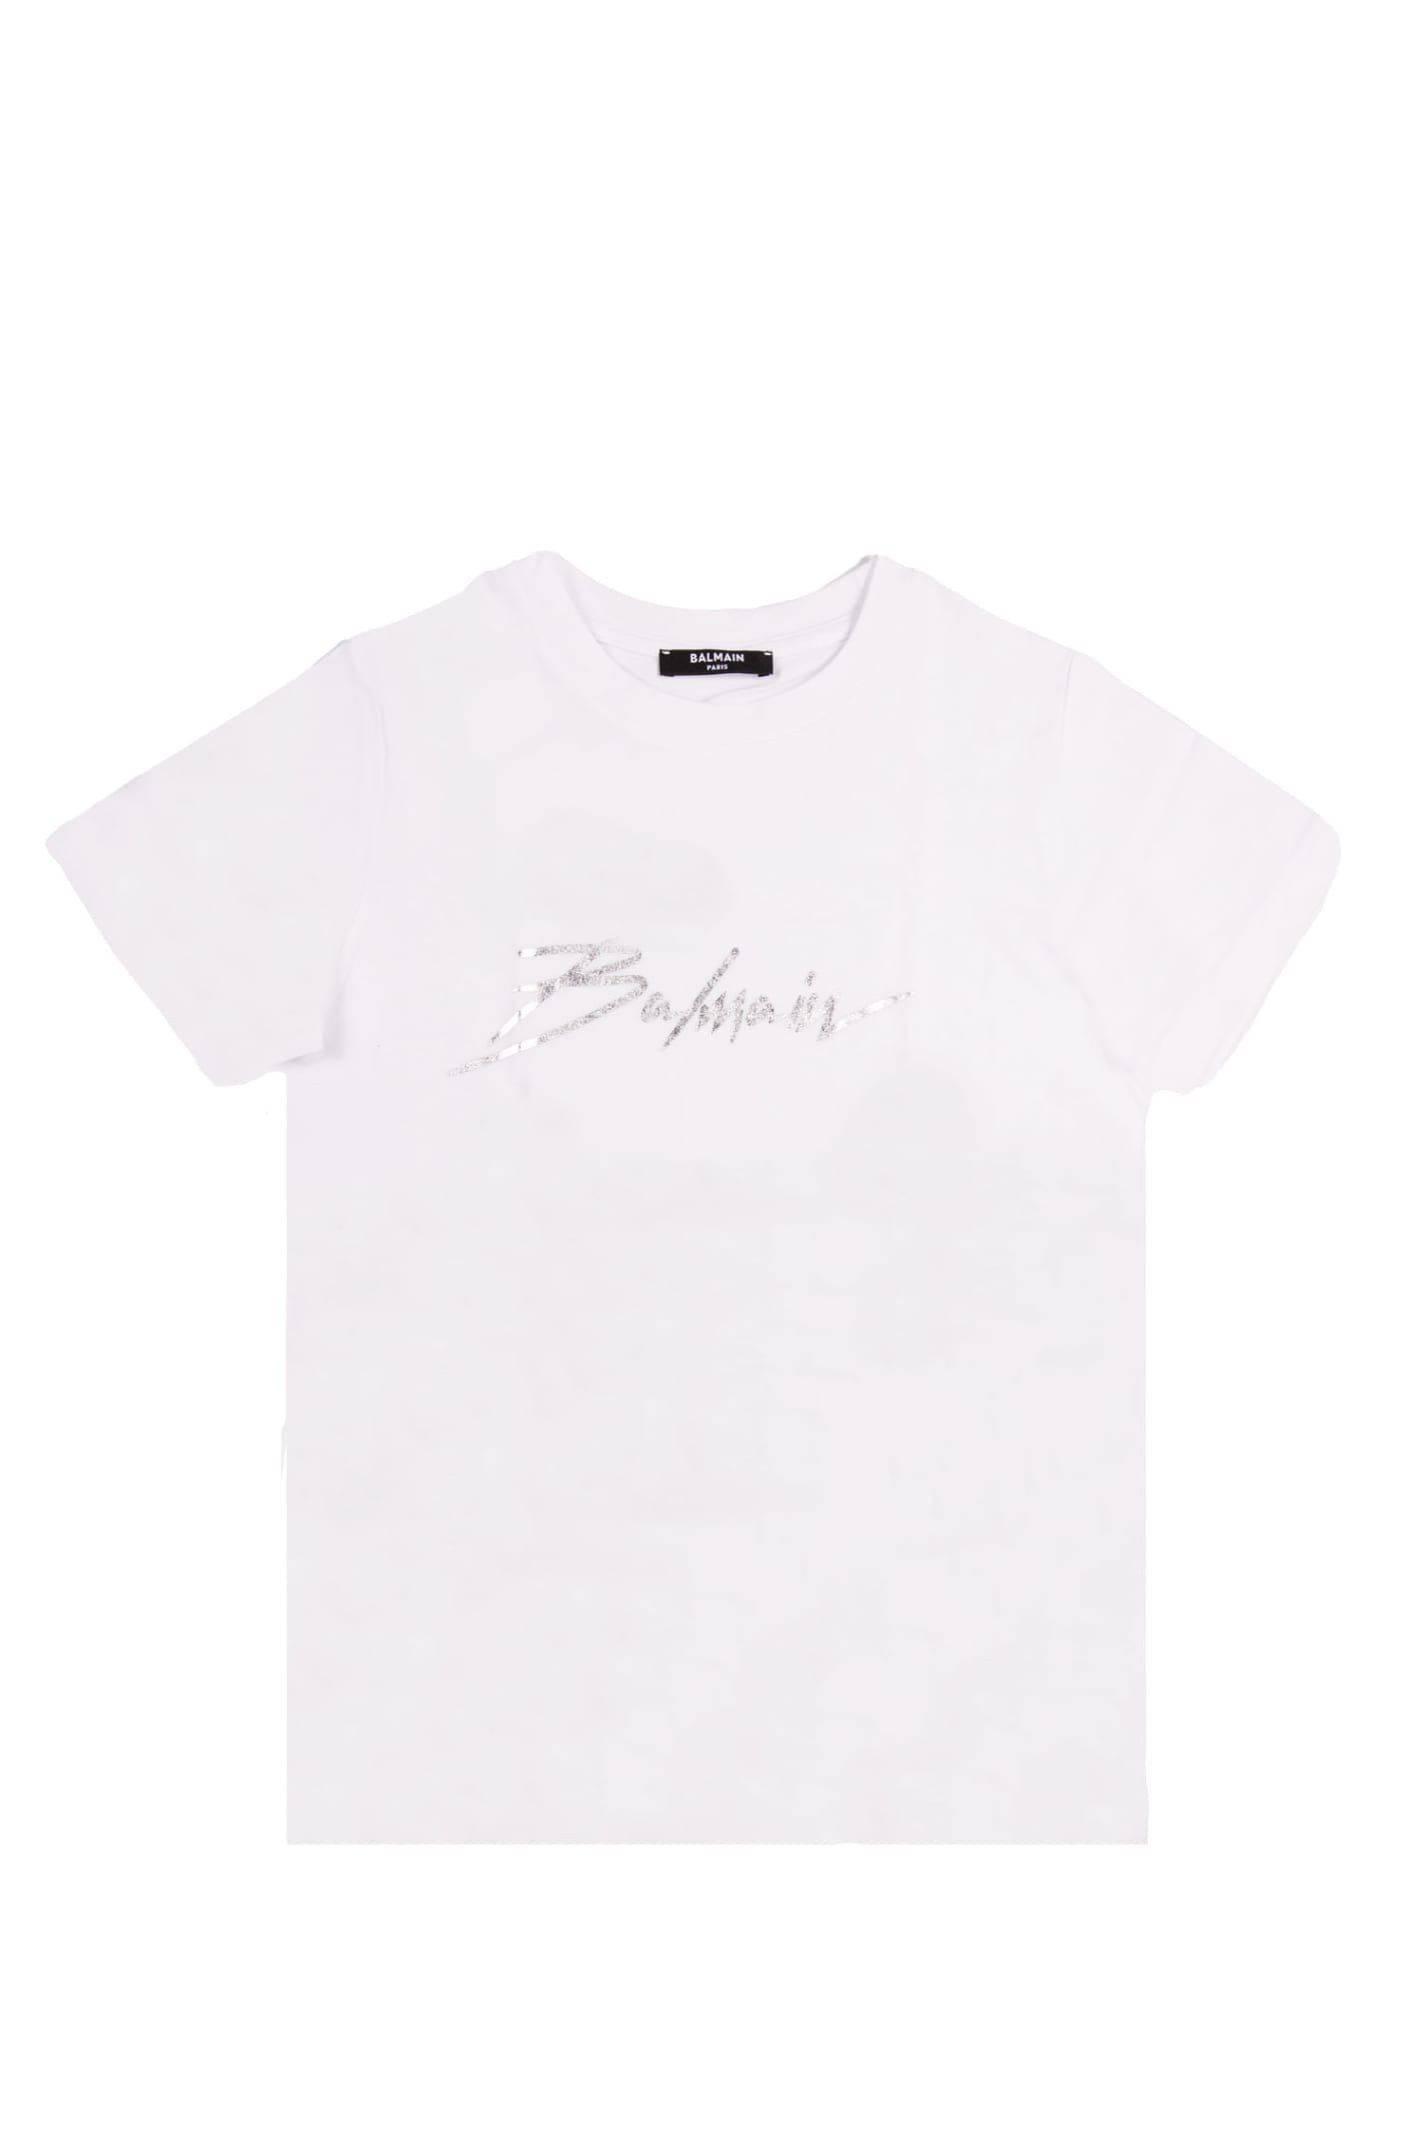 Balmain Kids' Cotton T-shirt In White